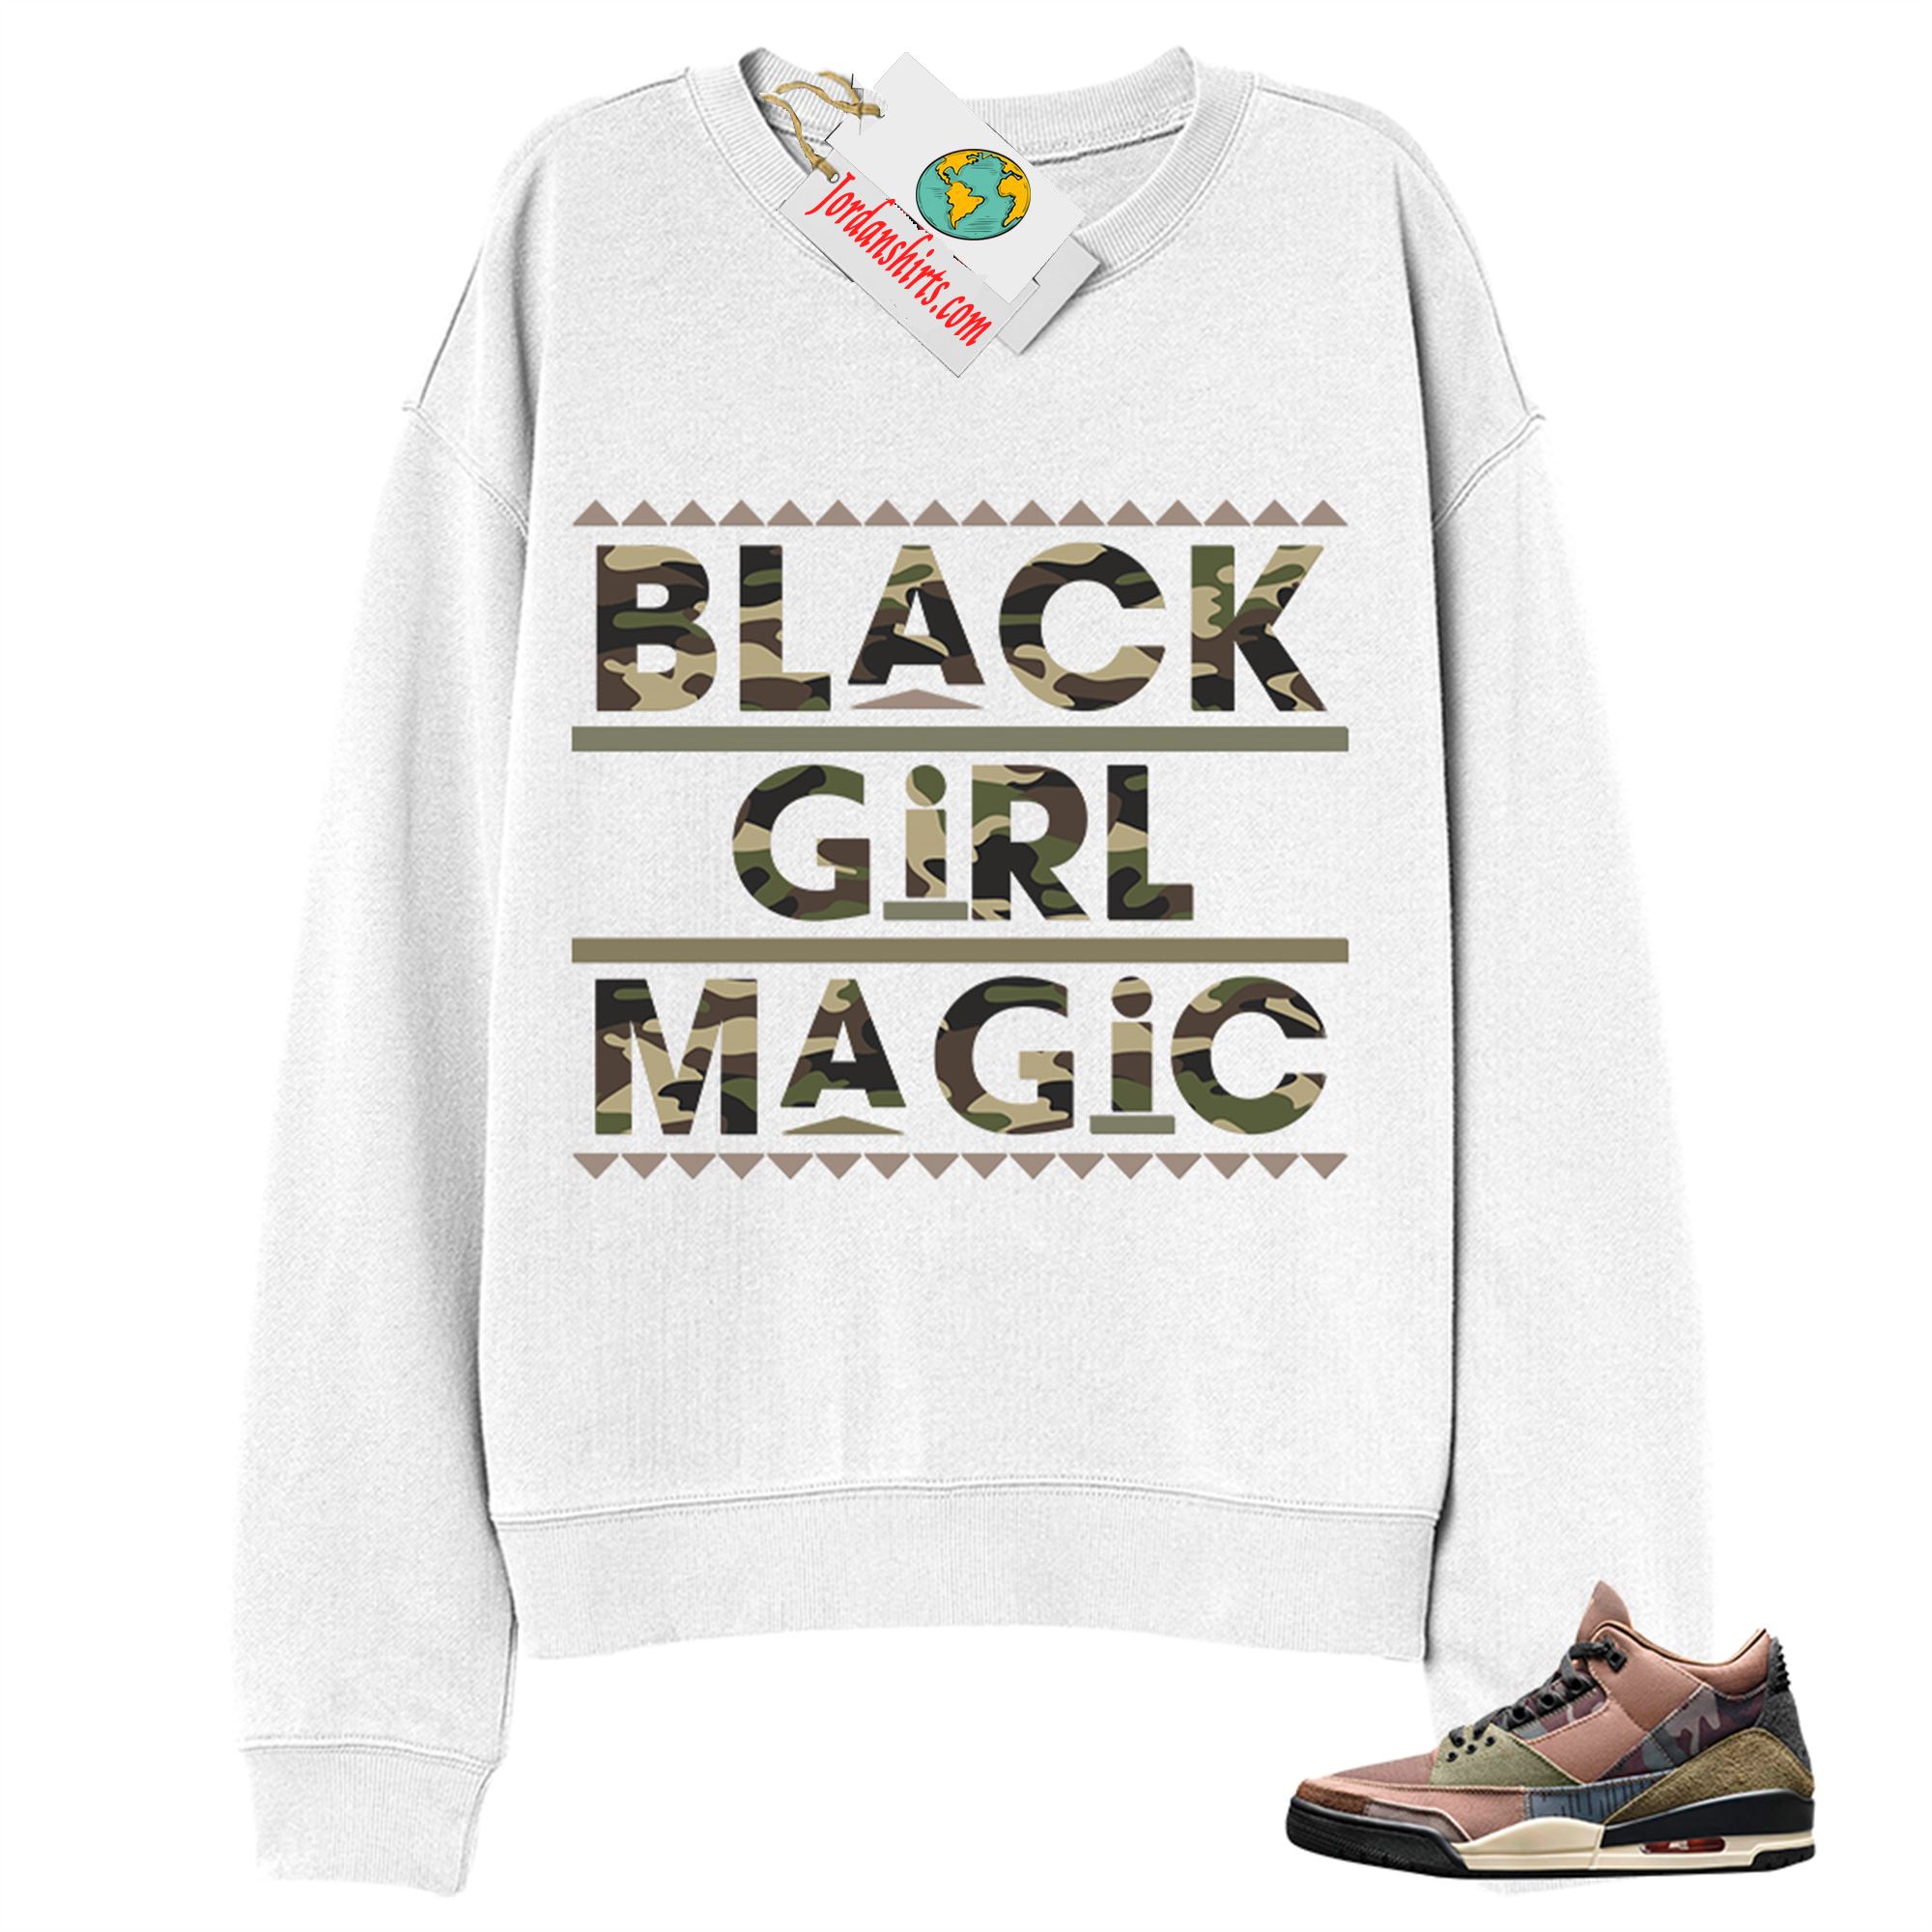 Jordan 3 Sweatshirt, Black Girl Magic White Sweatshirt Air Jordan 3 Camo 3s Plus Size Up To 5xl